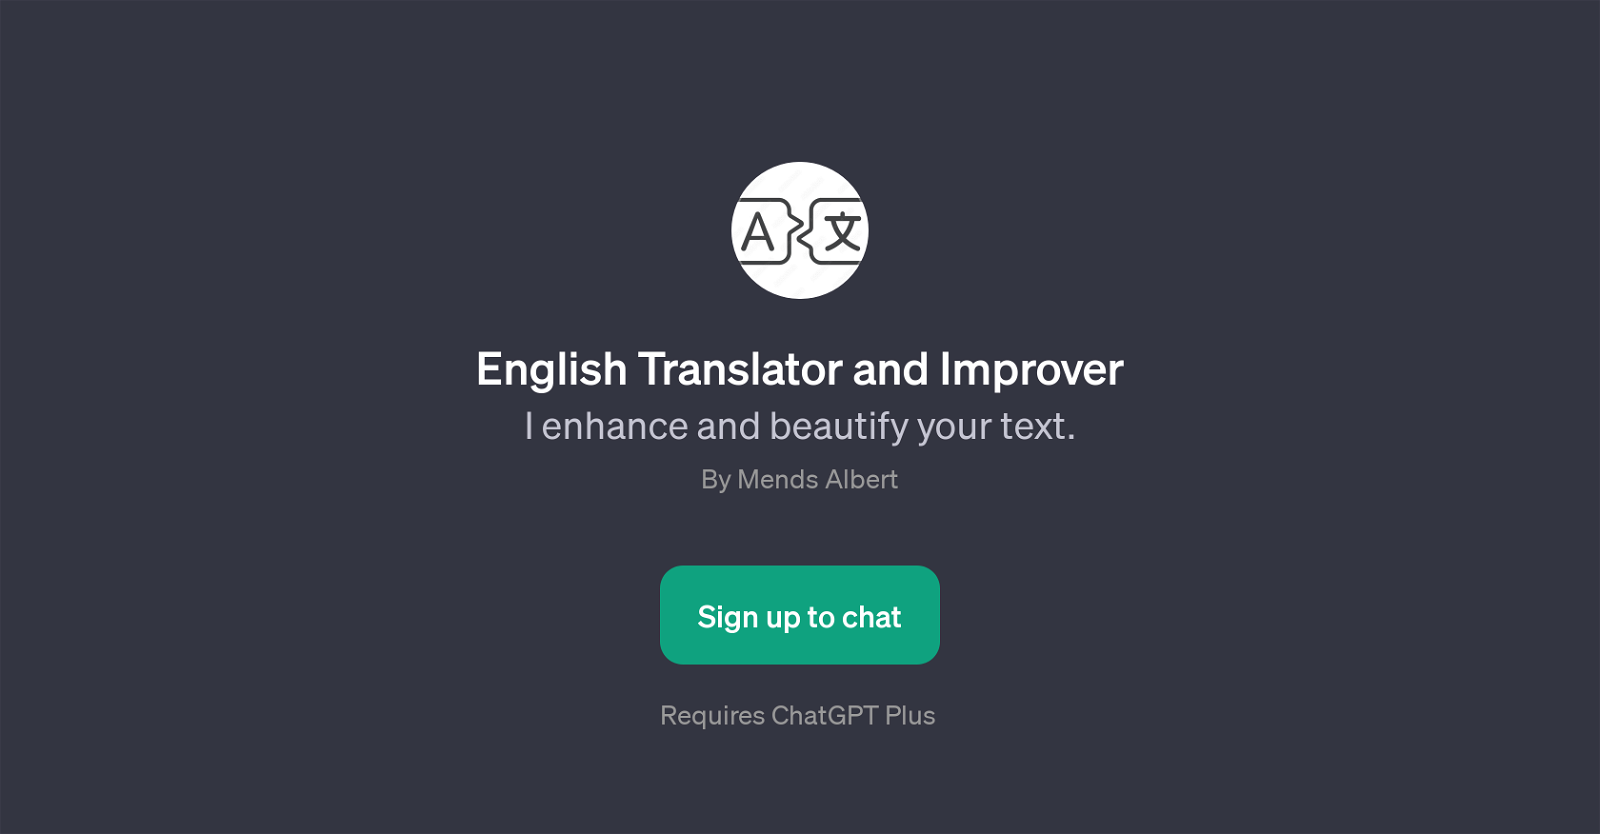 English Translator and Improver website